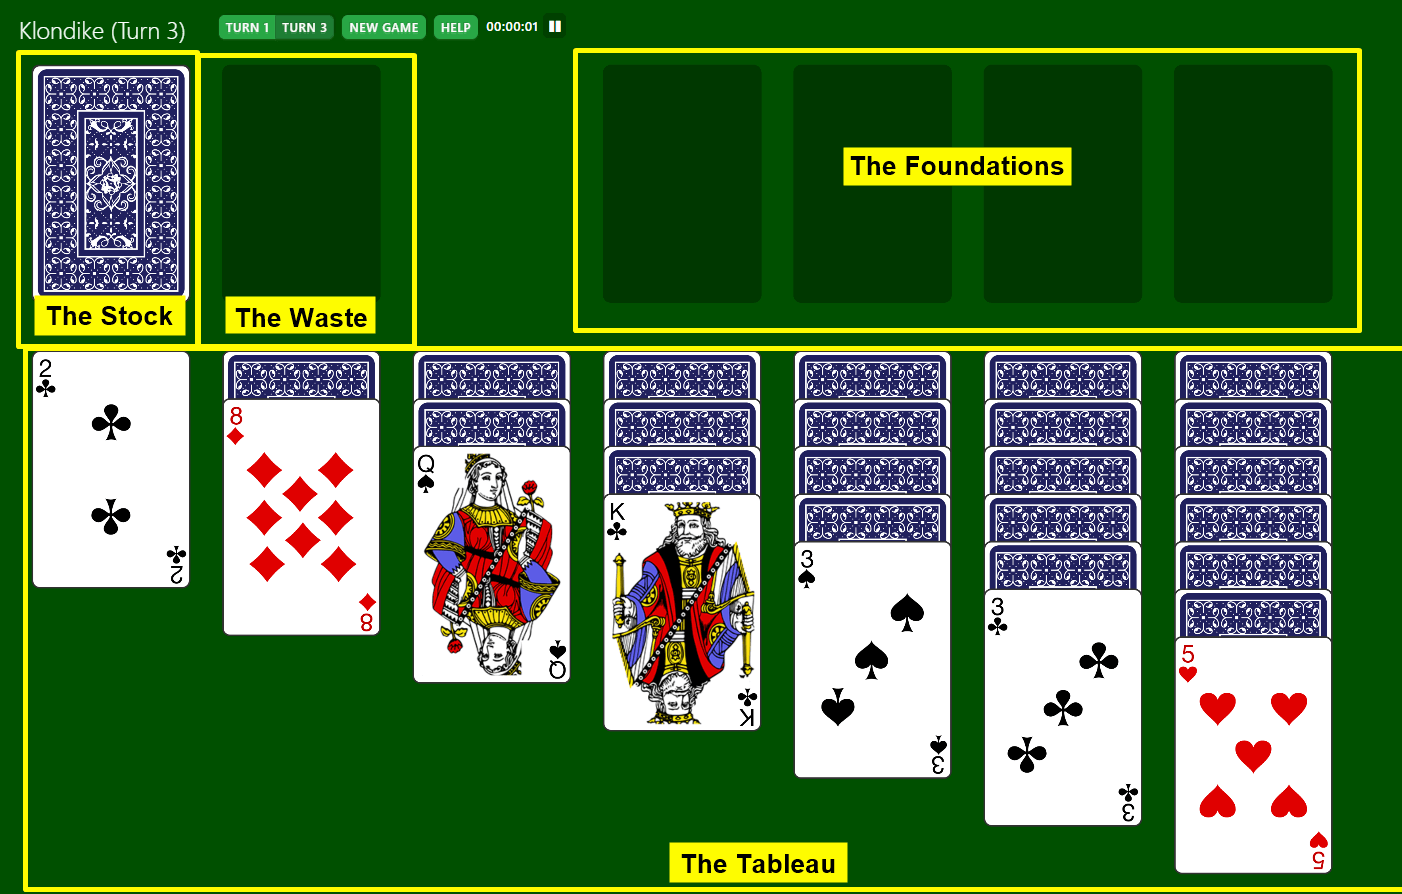 original klondike solitaire game